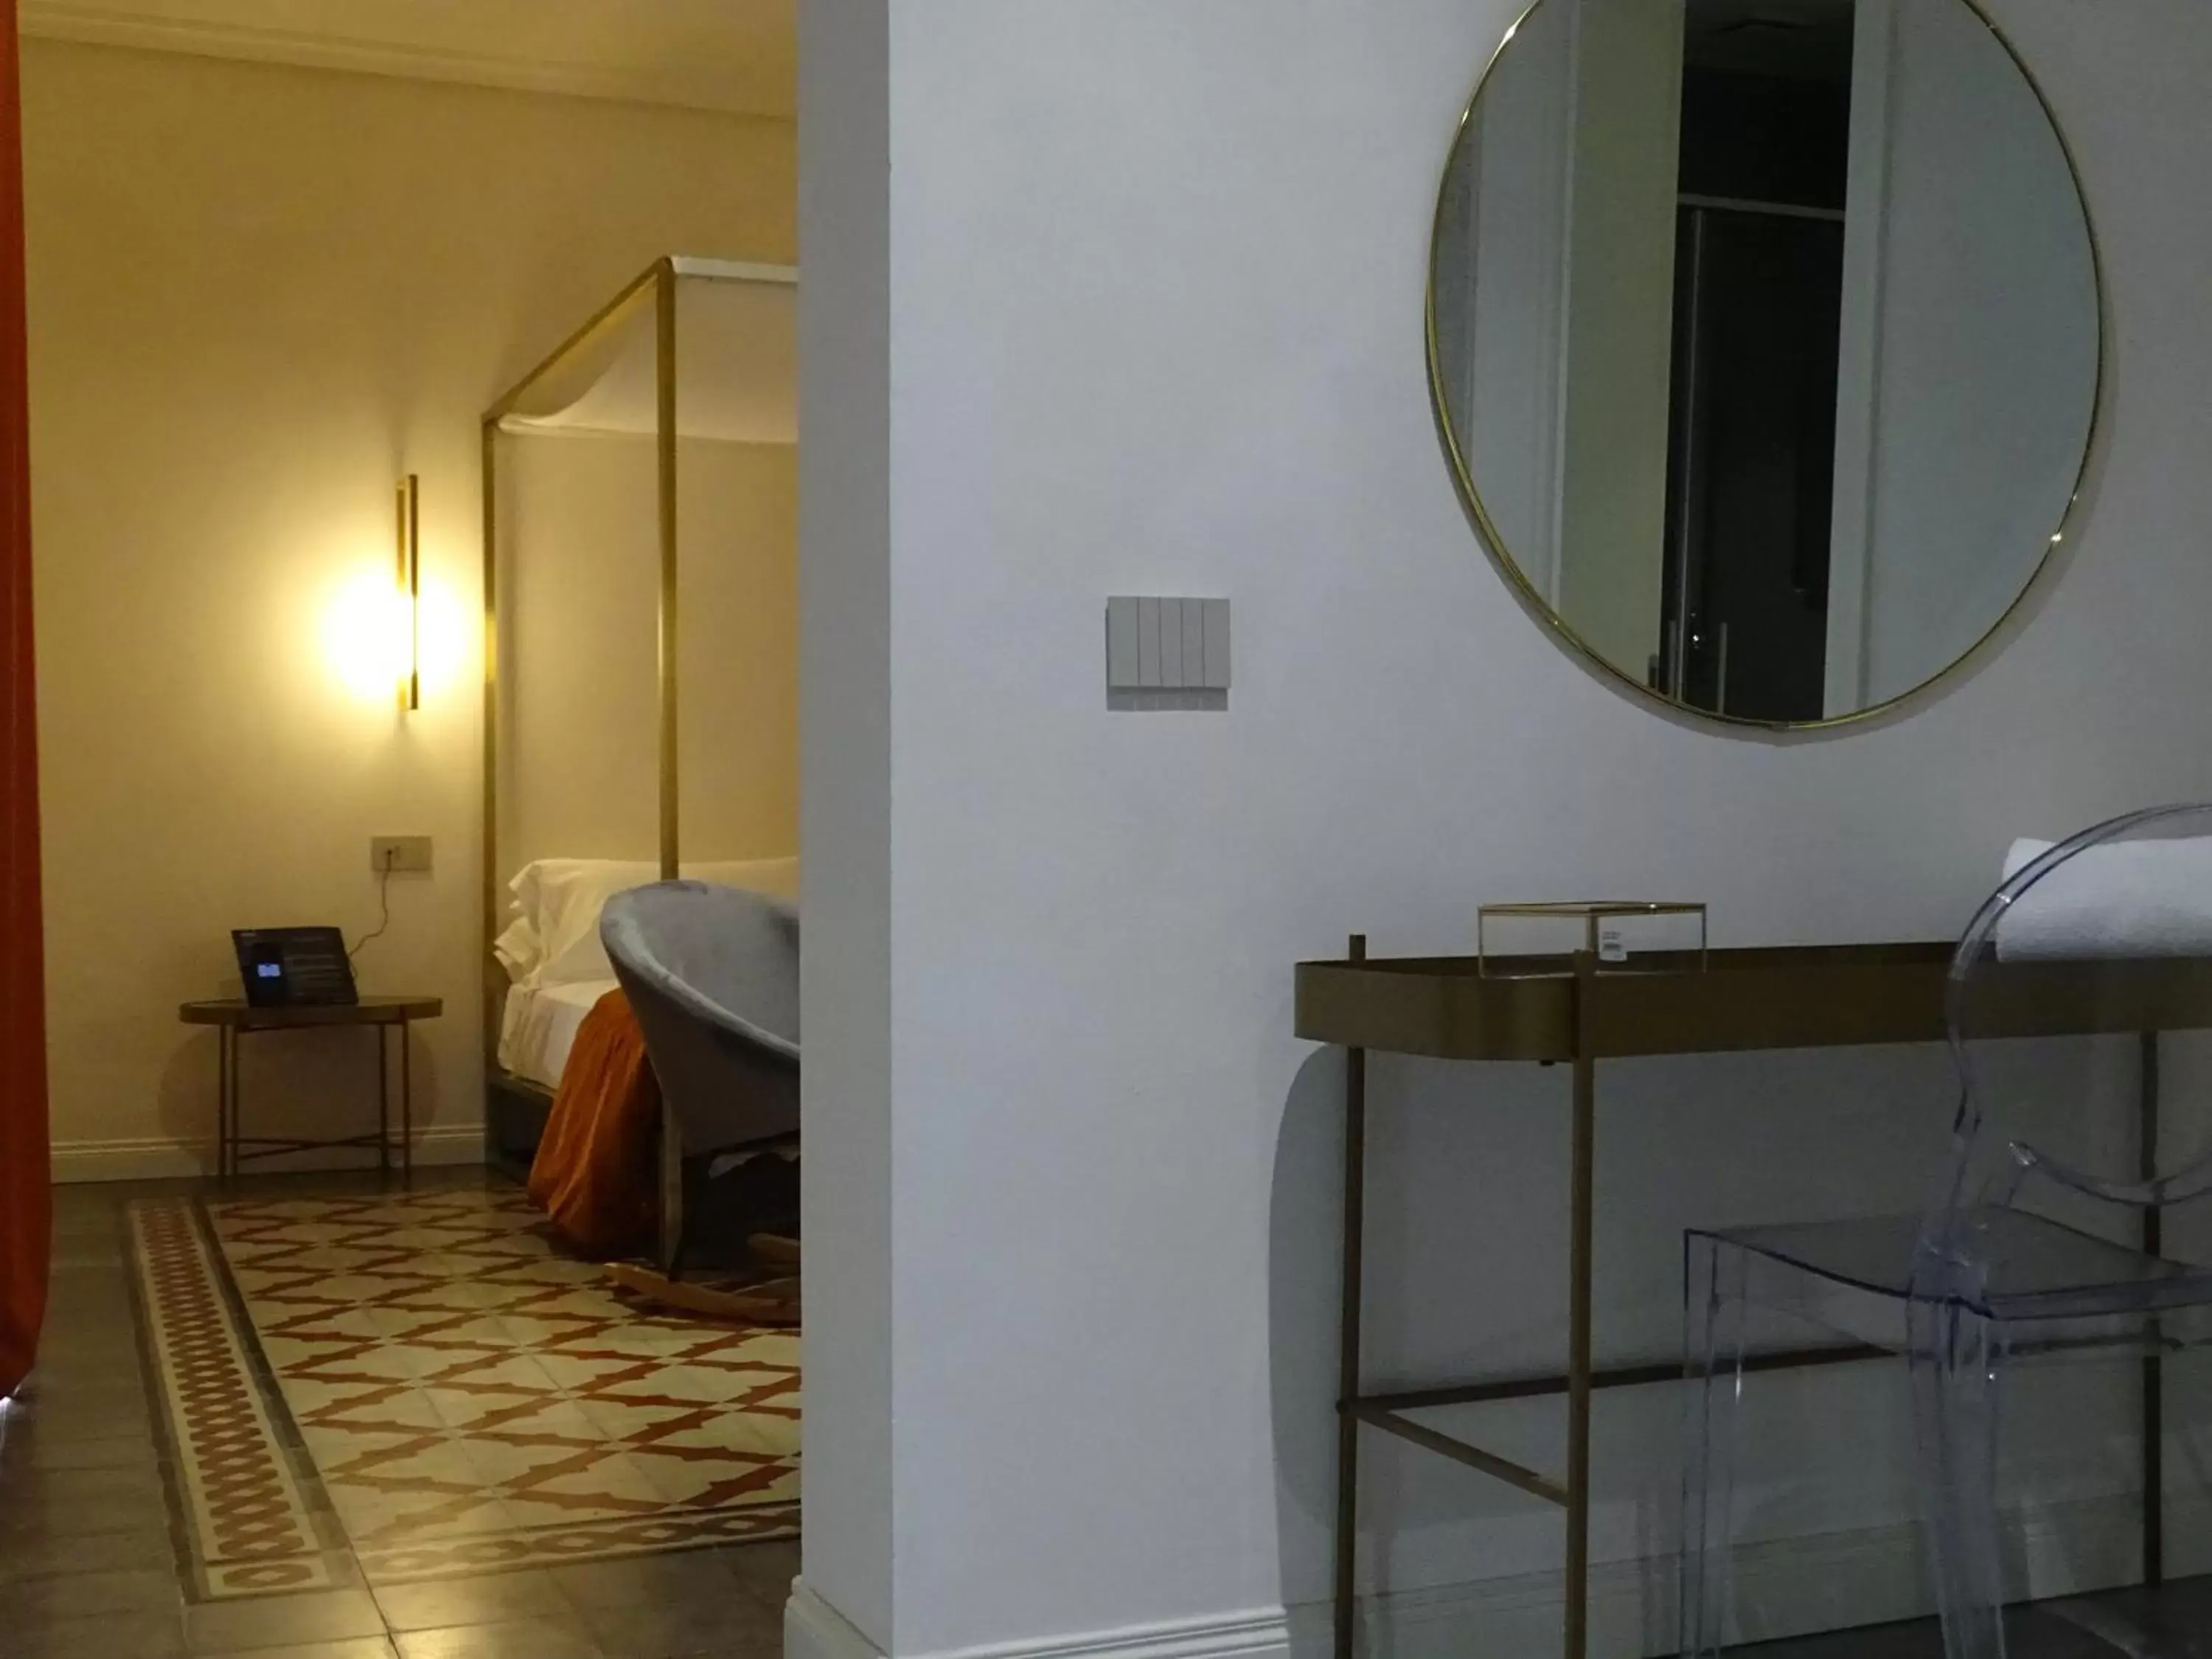 Photo of the whole room, Bathroom in 20 Miglia Boutique Hotel